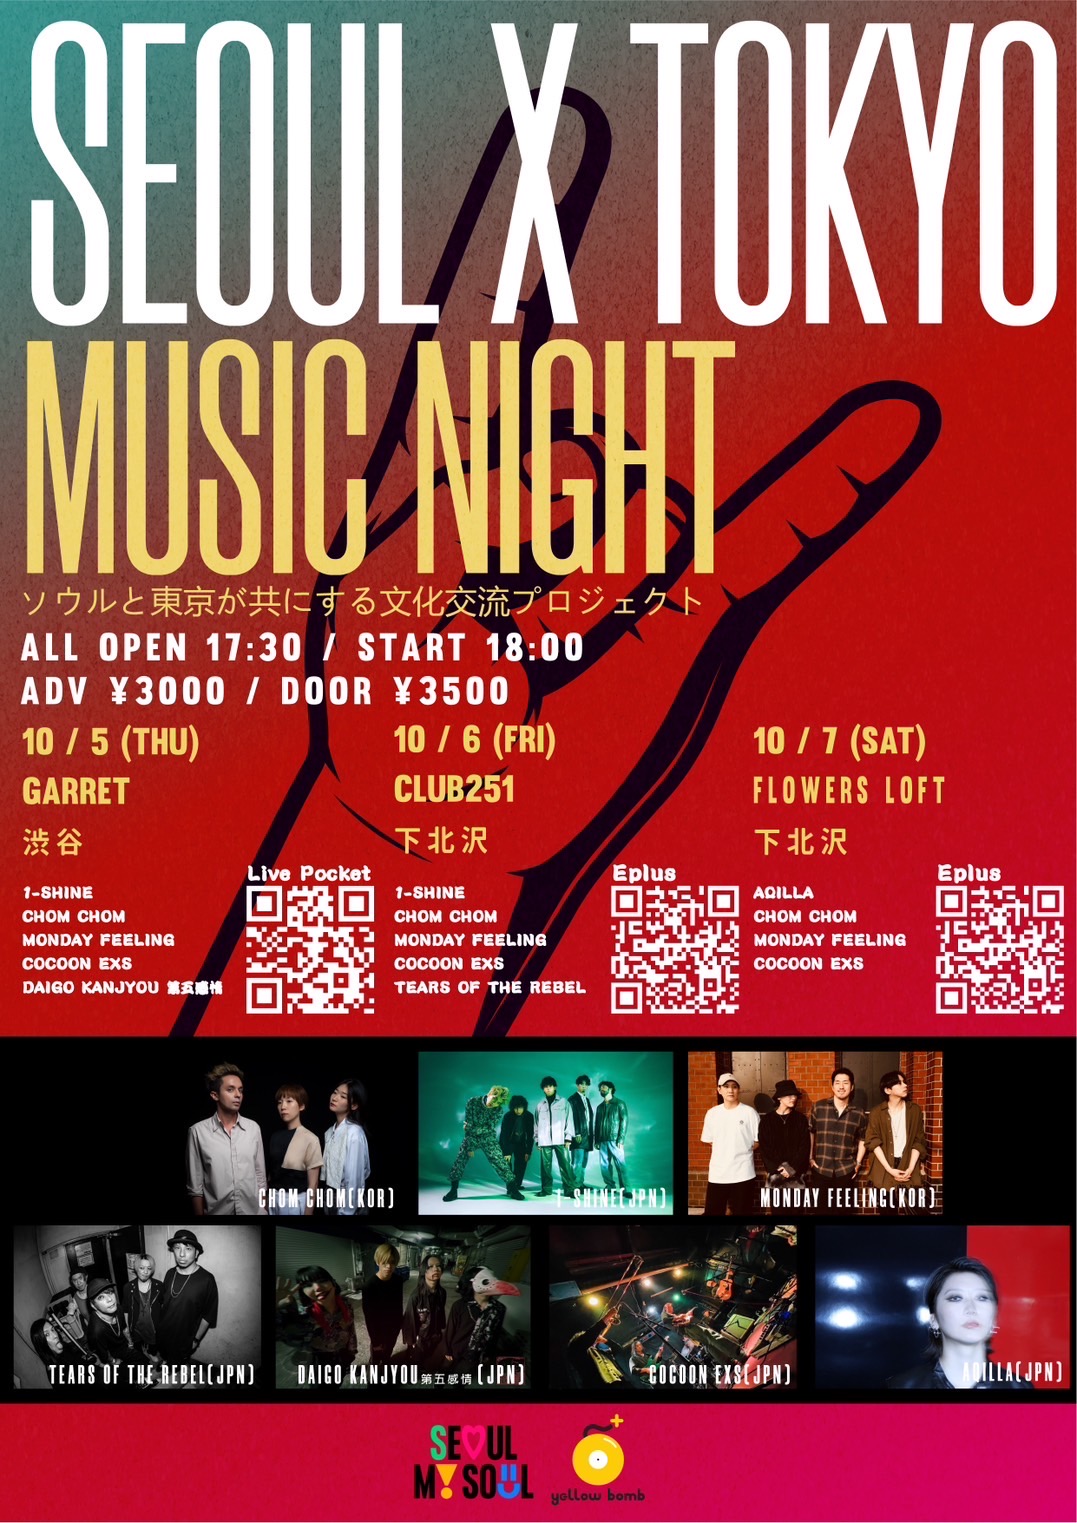 SEOUL X TOKYO MUSIC NIGHT